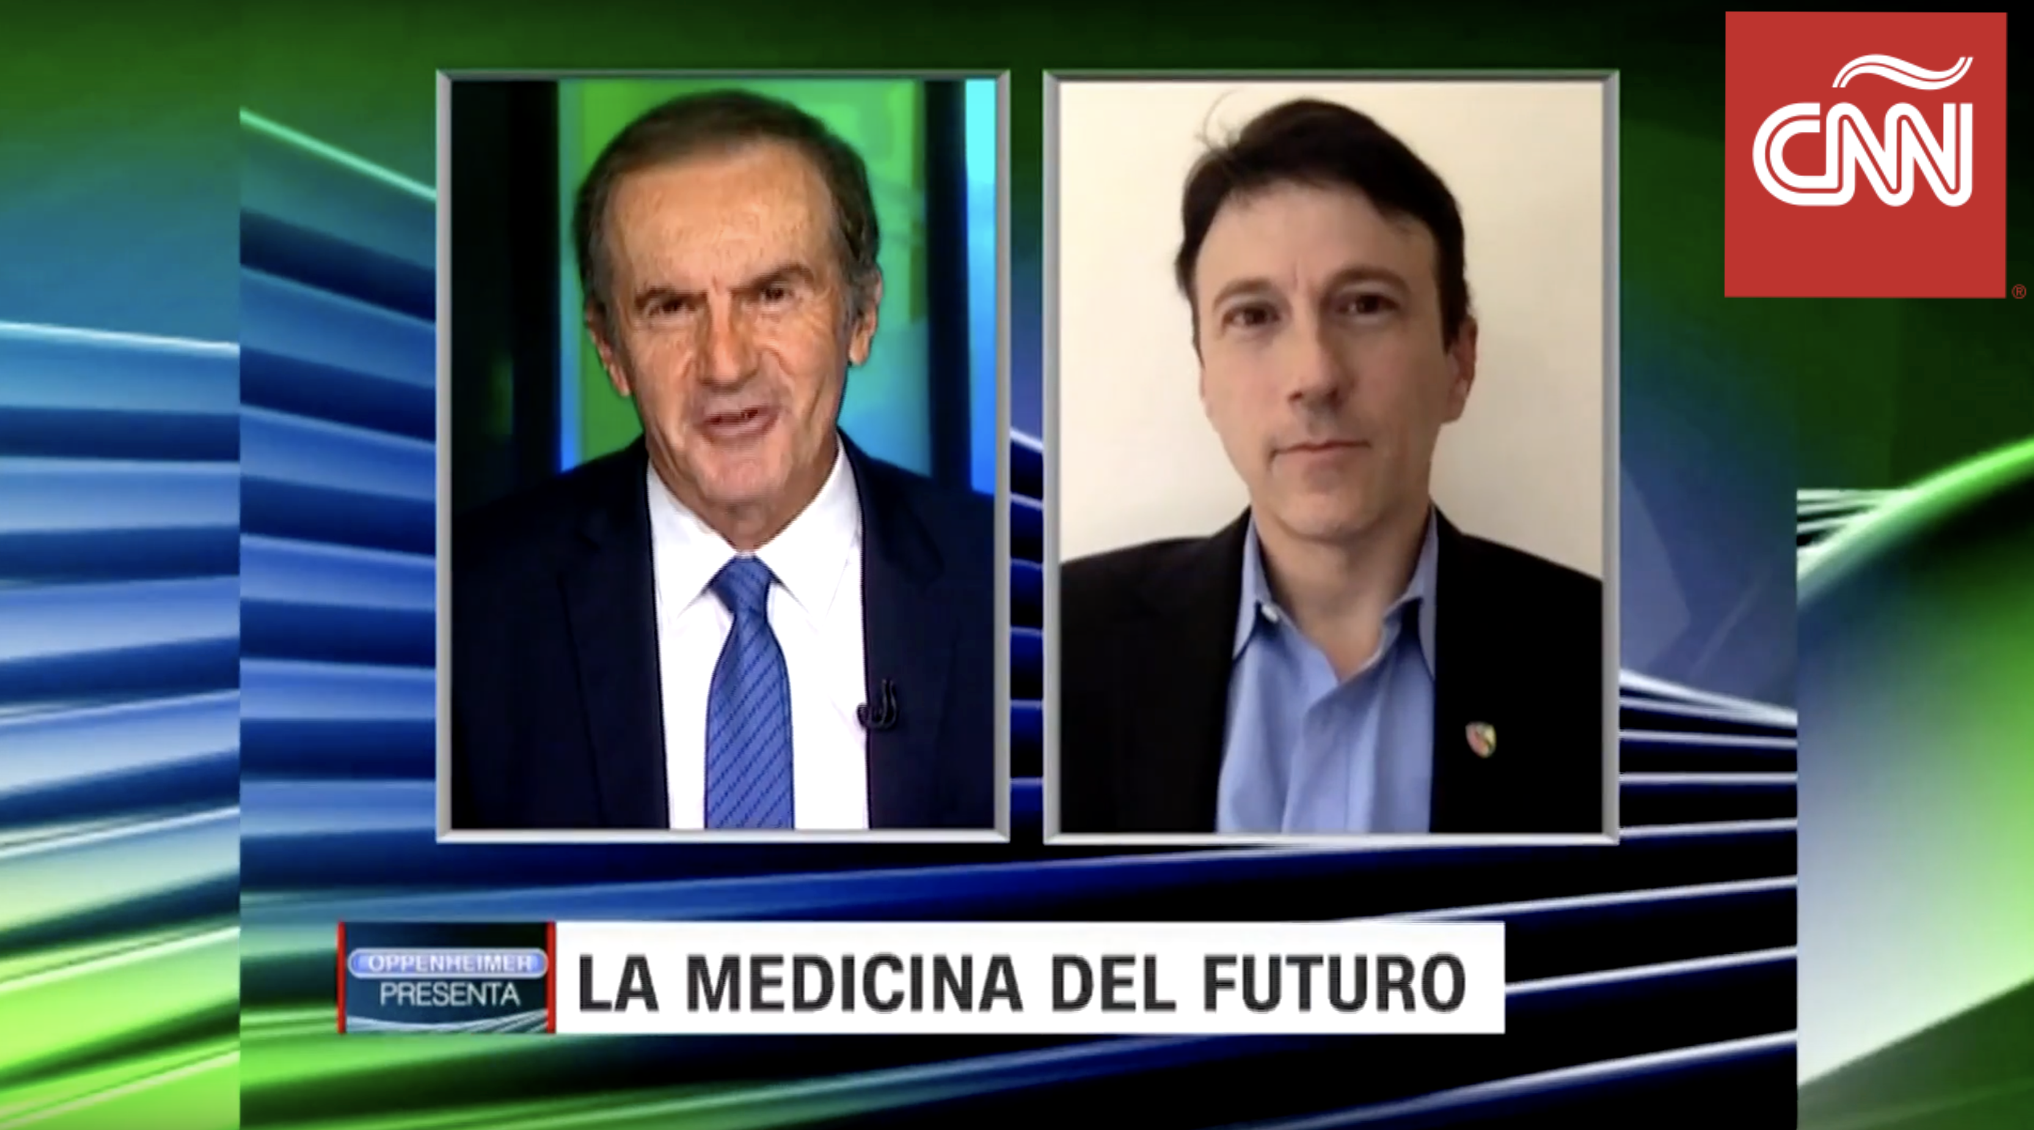 CNN Espanol - Future of Medicine